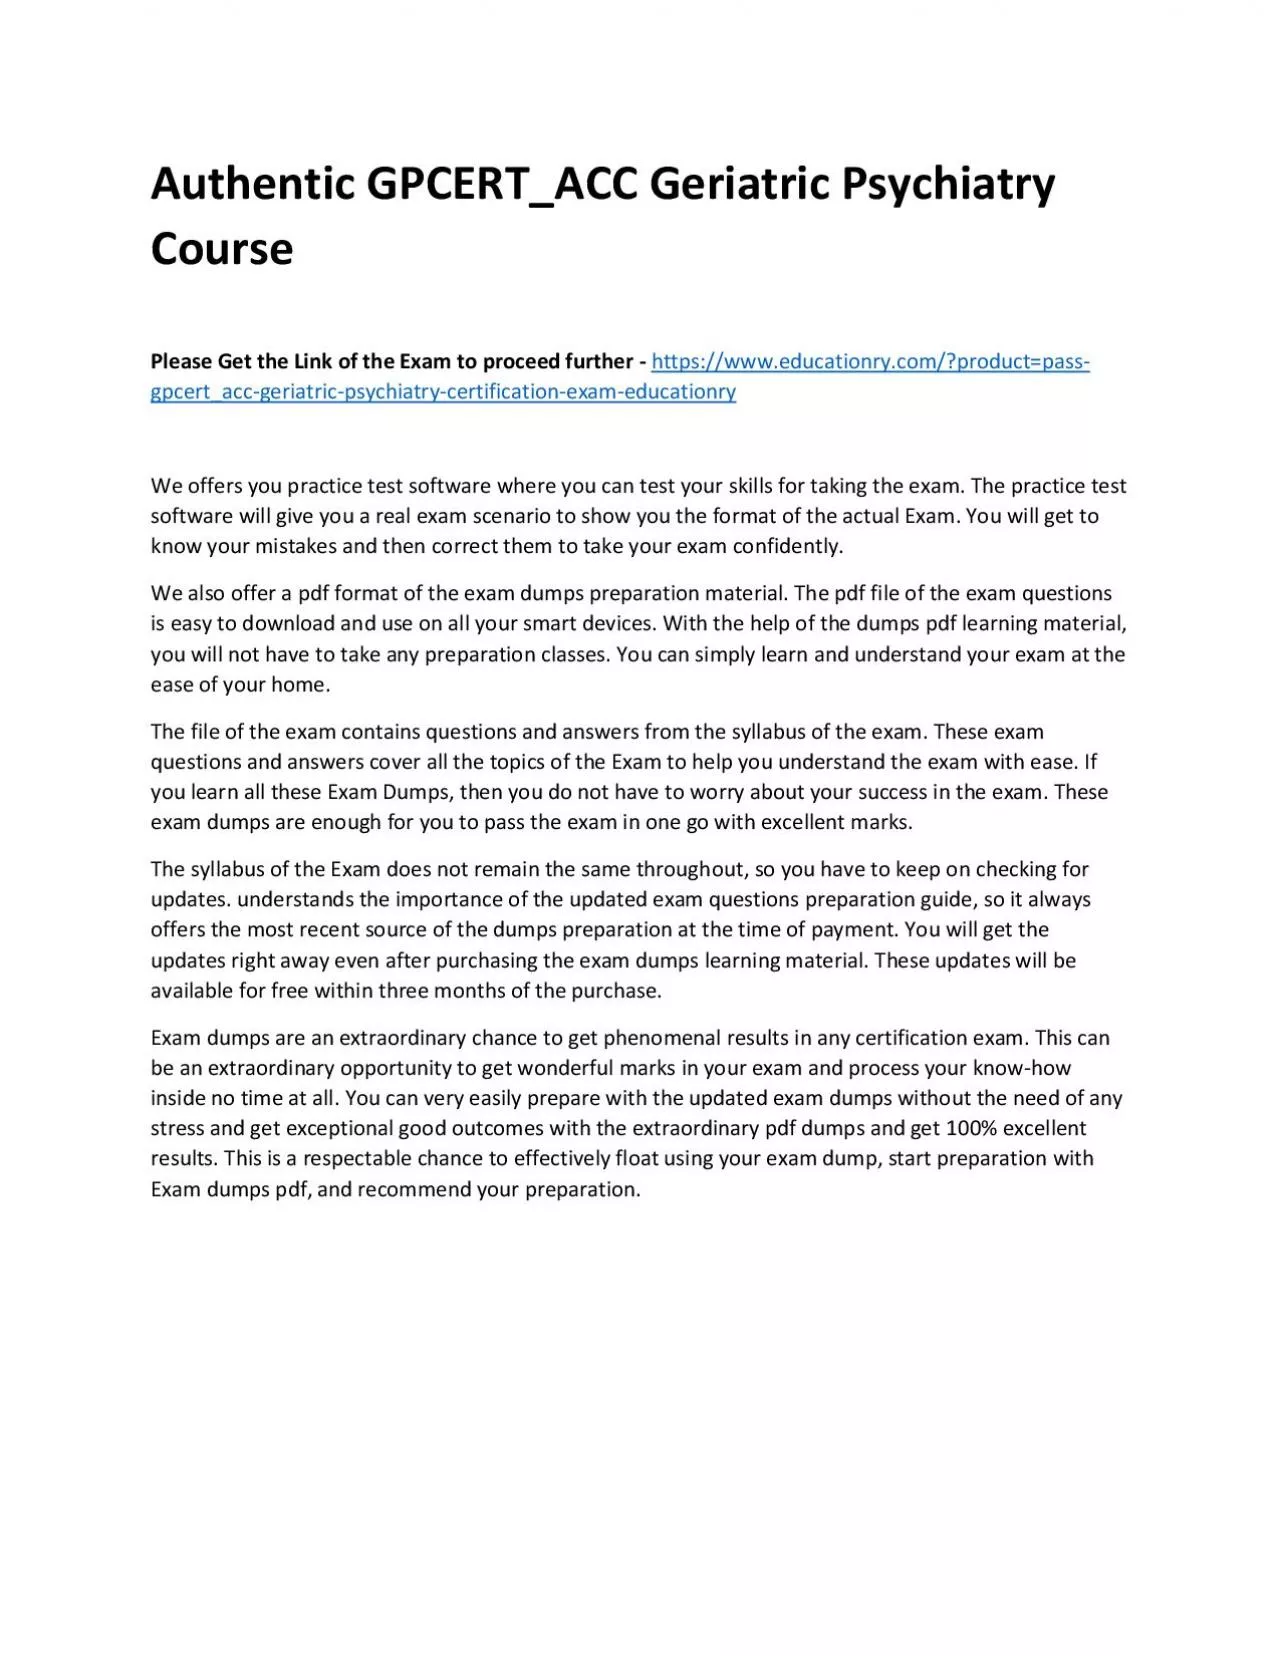 Authentic GPCERT_ACC Geriatric Psychiatry Practice Course